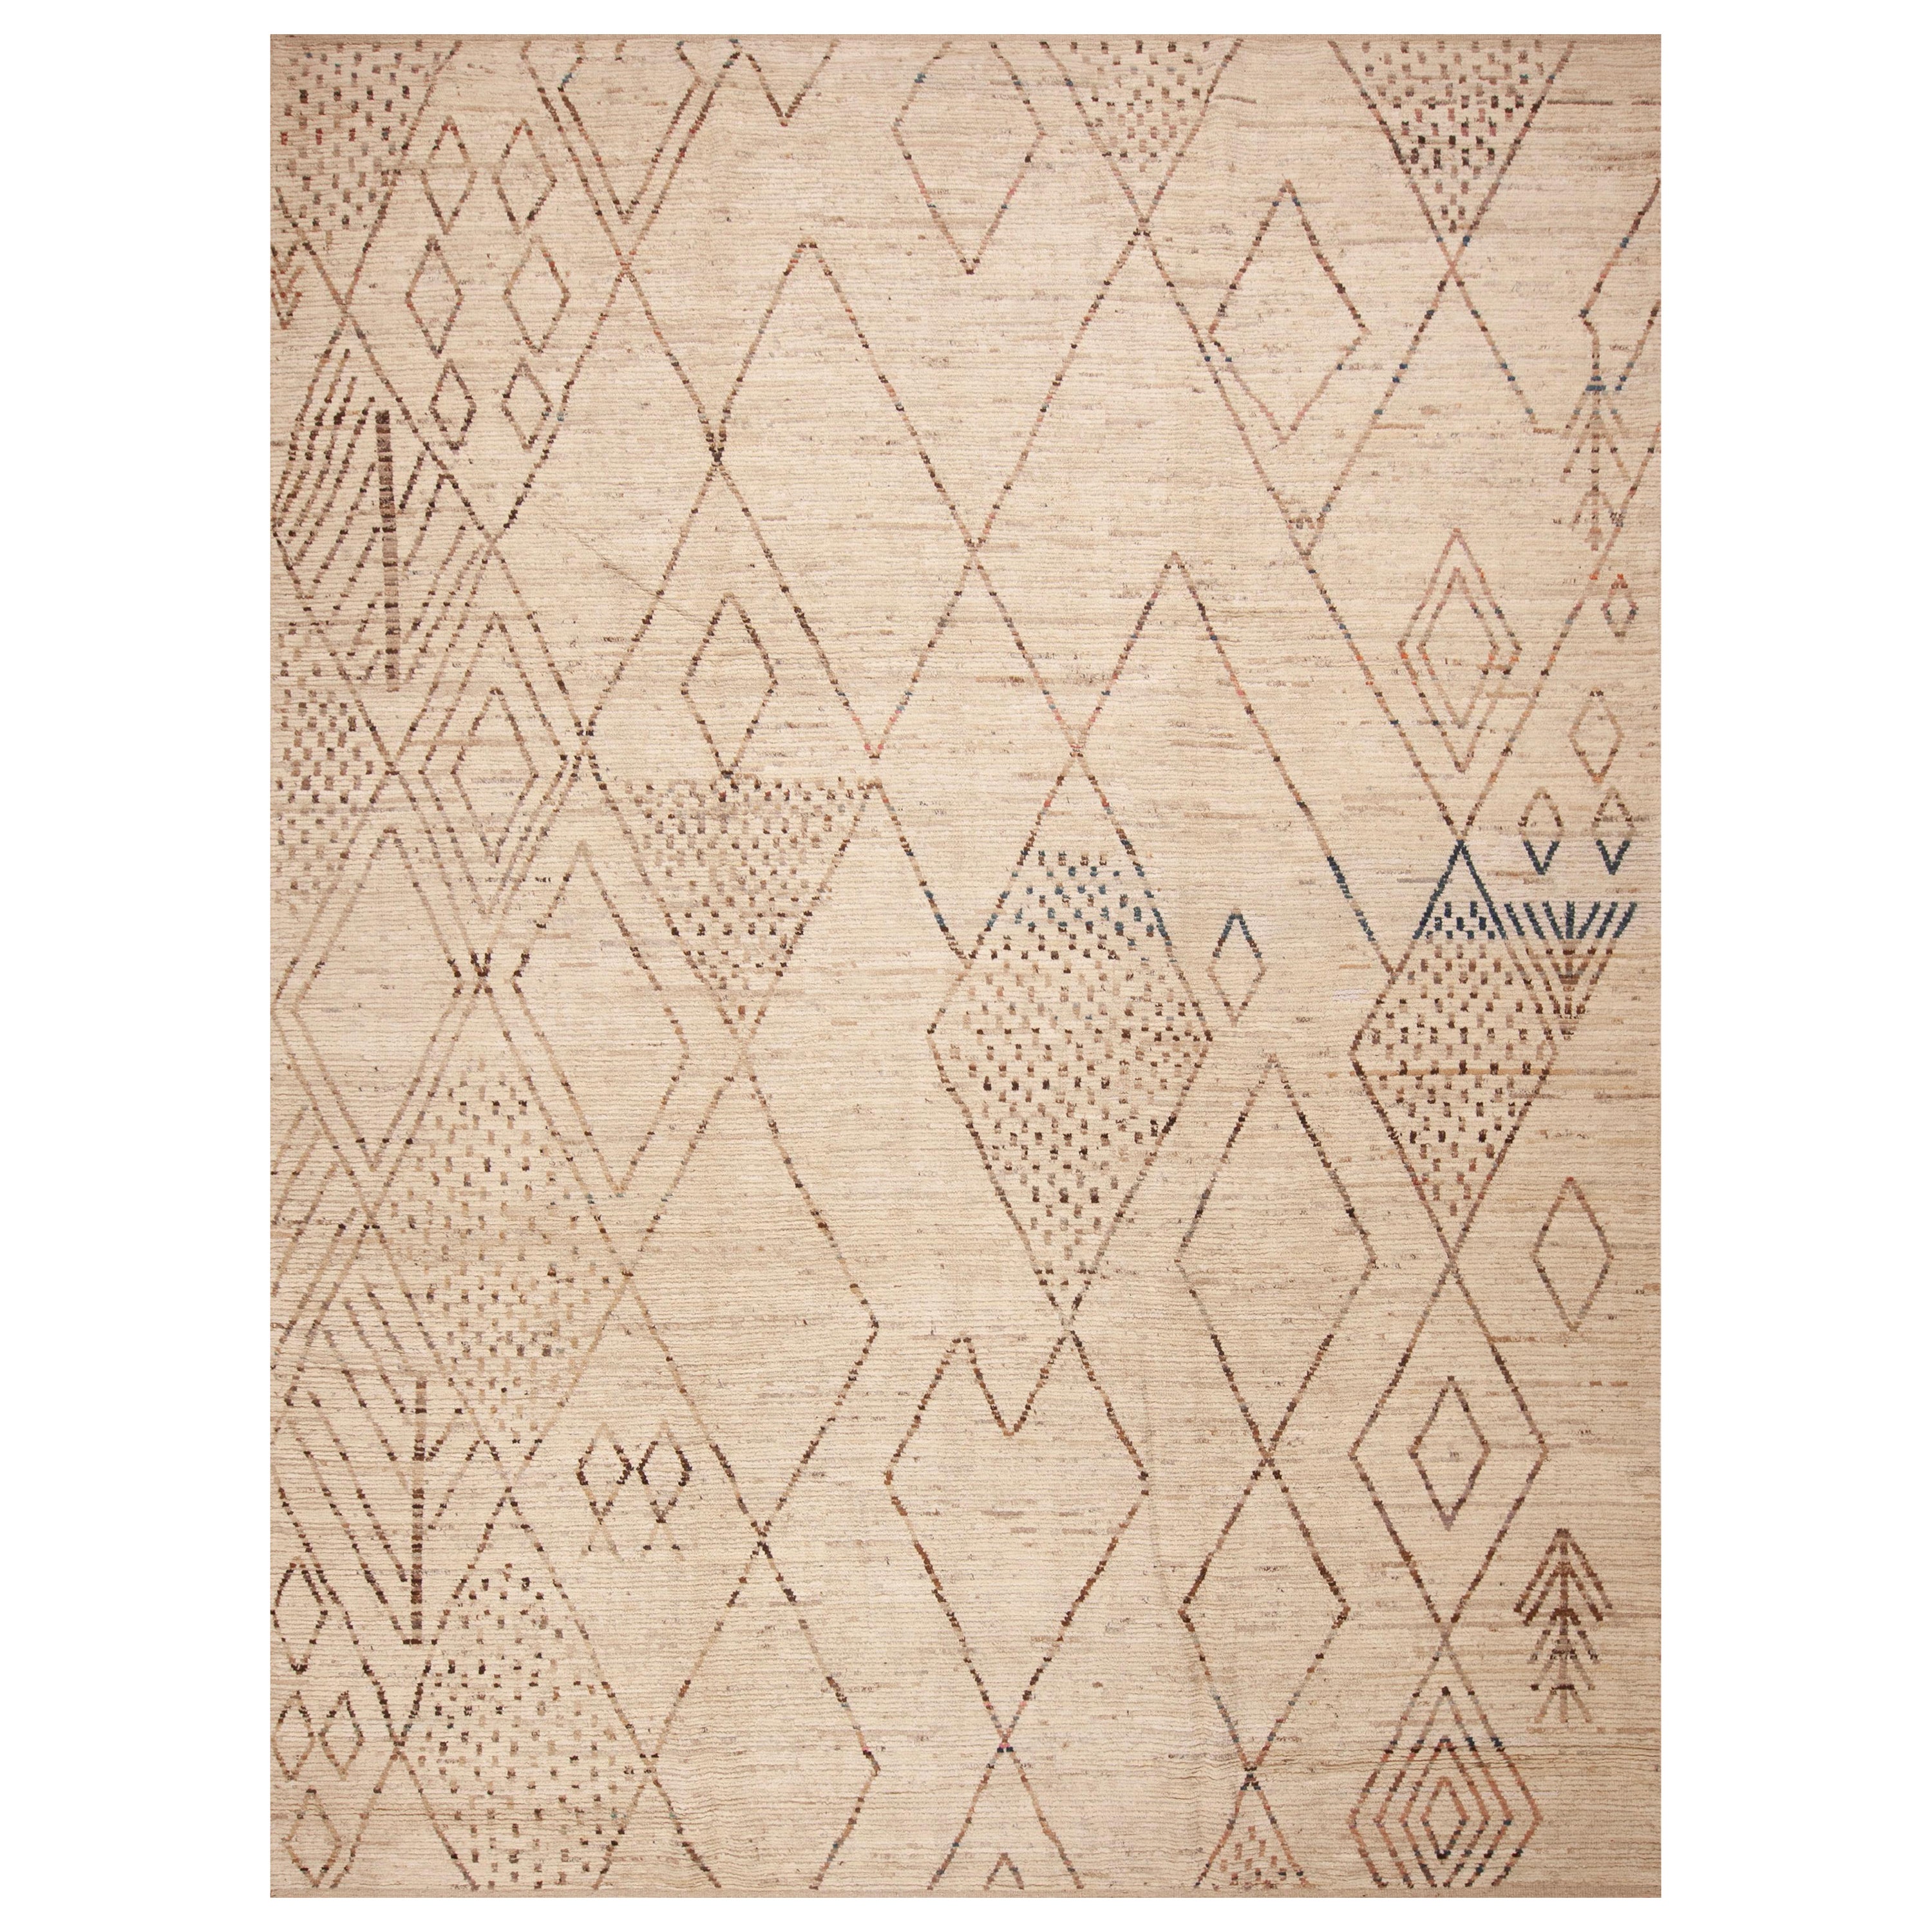 Nazmiyal Kollektion Stammeskunst Beni Ourain Design Muster Moderner Teppich 10'4" x 13'9"